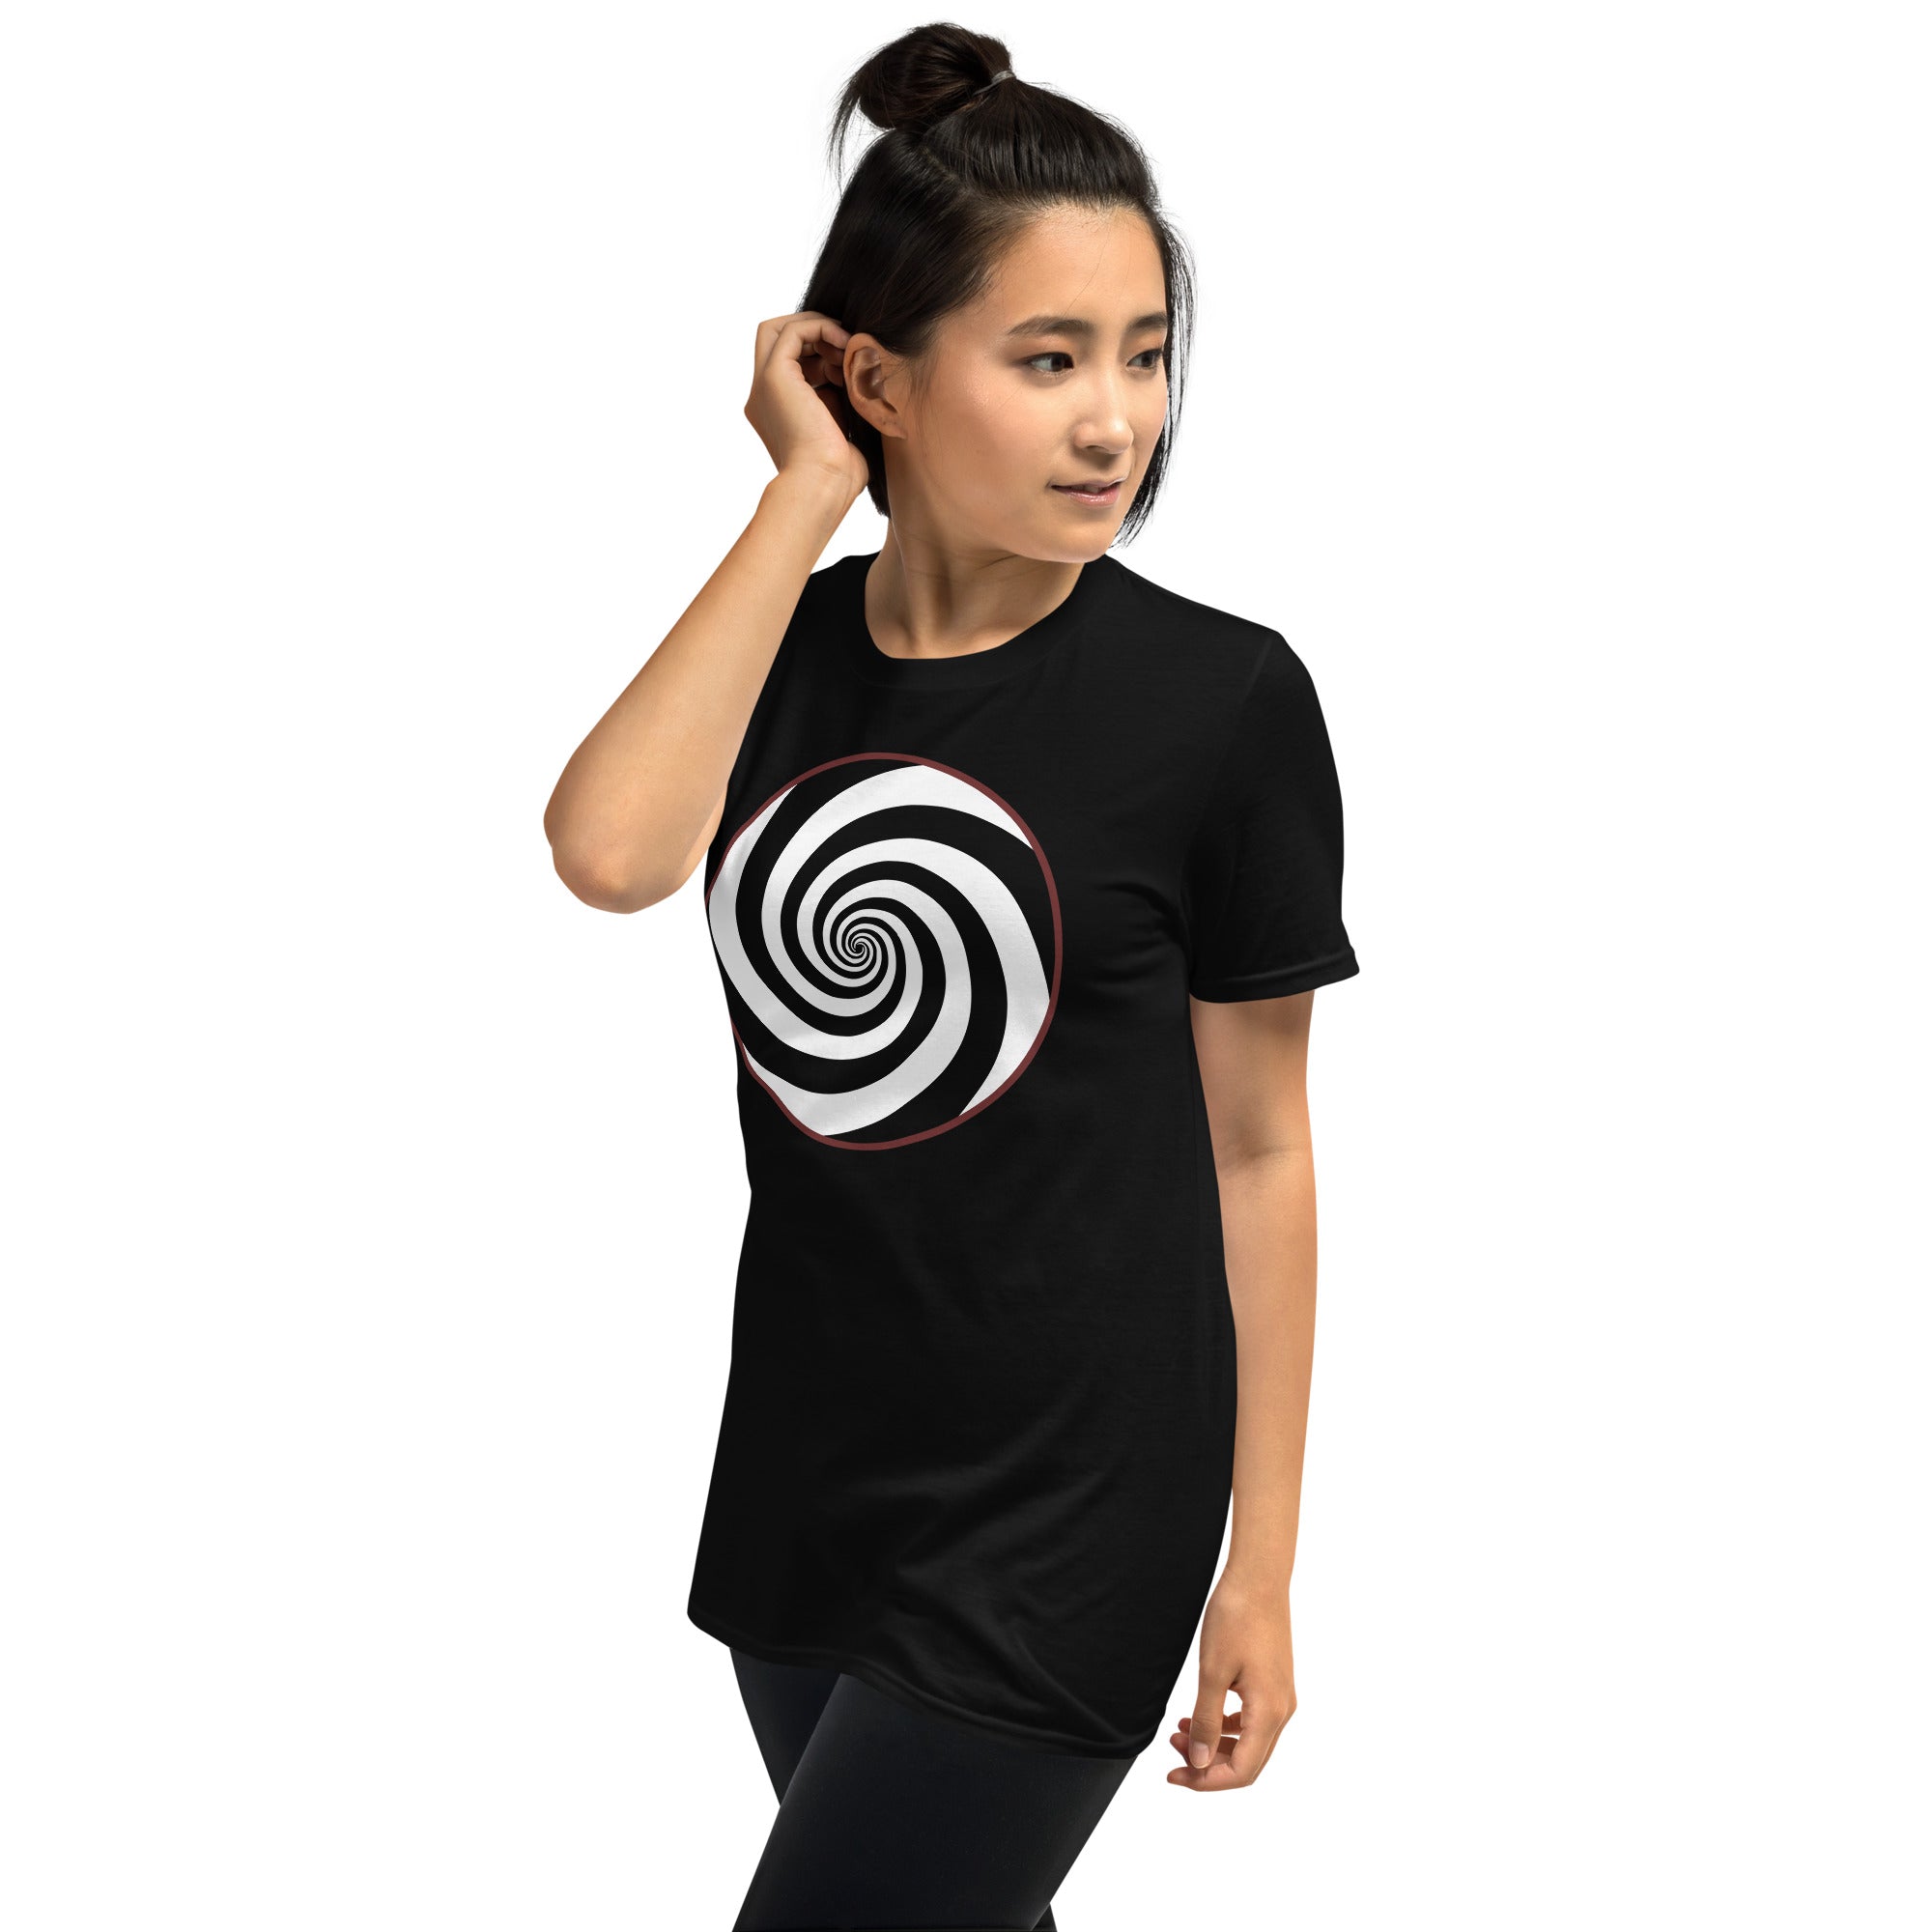 Hypnotic Hypnosis Spiral Swirl Illusion Twilight Zone Short-Sleeve T-Shirt